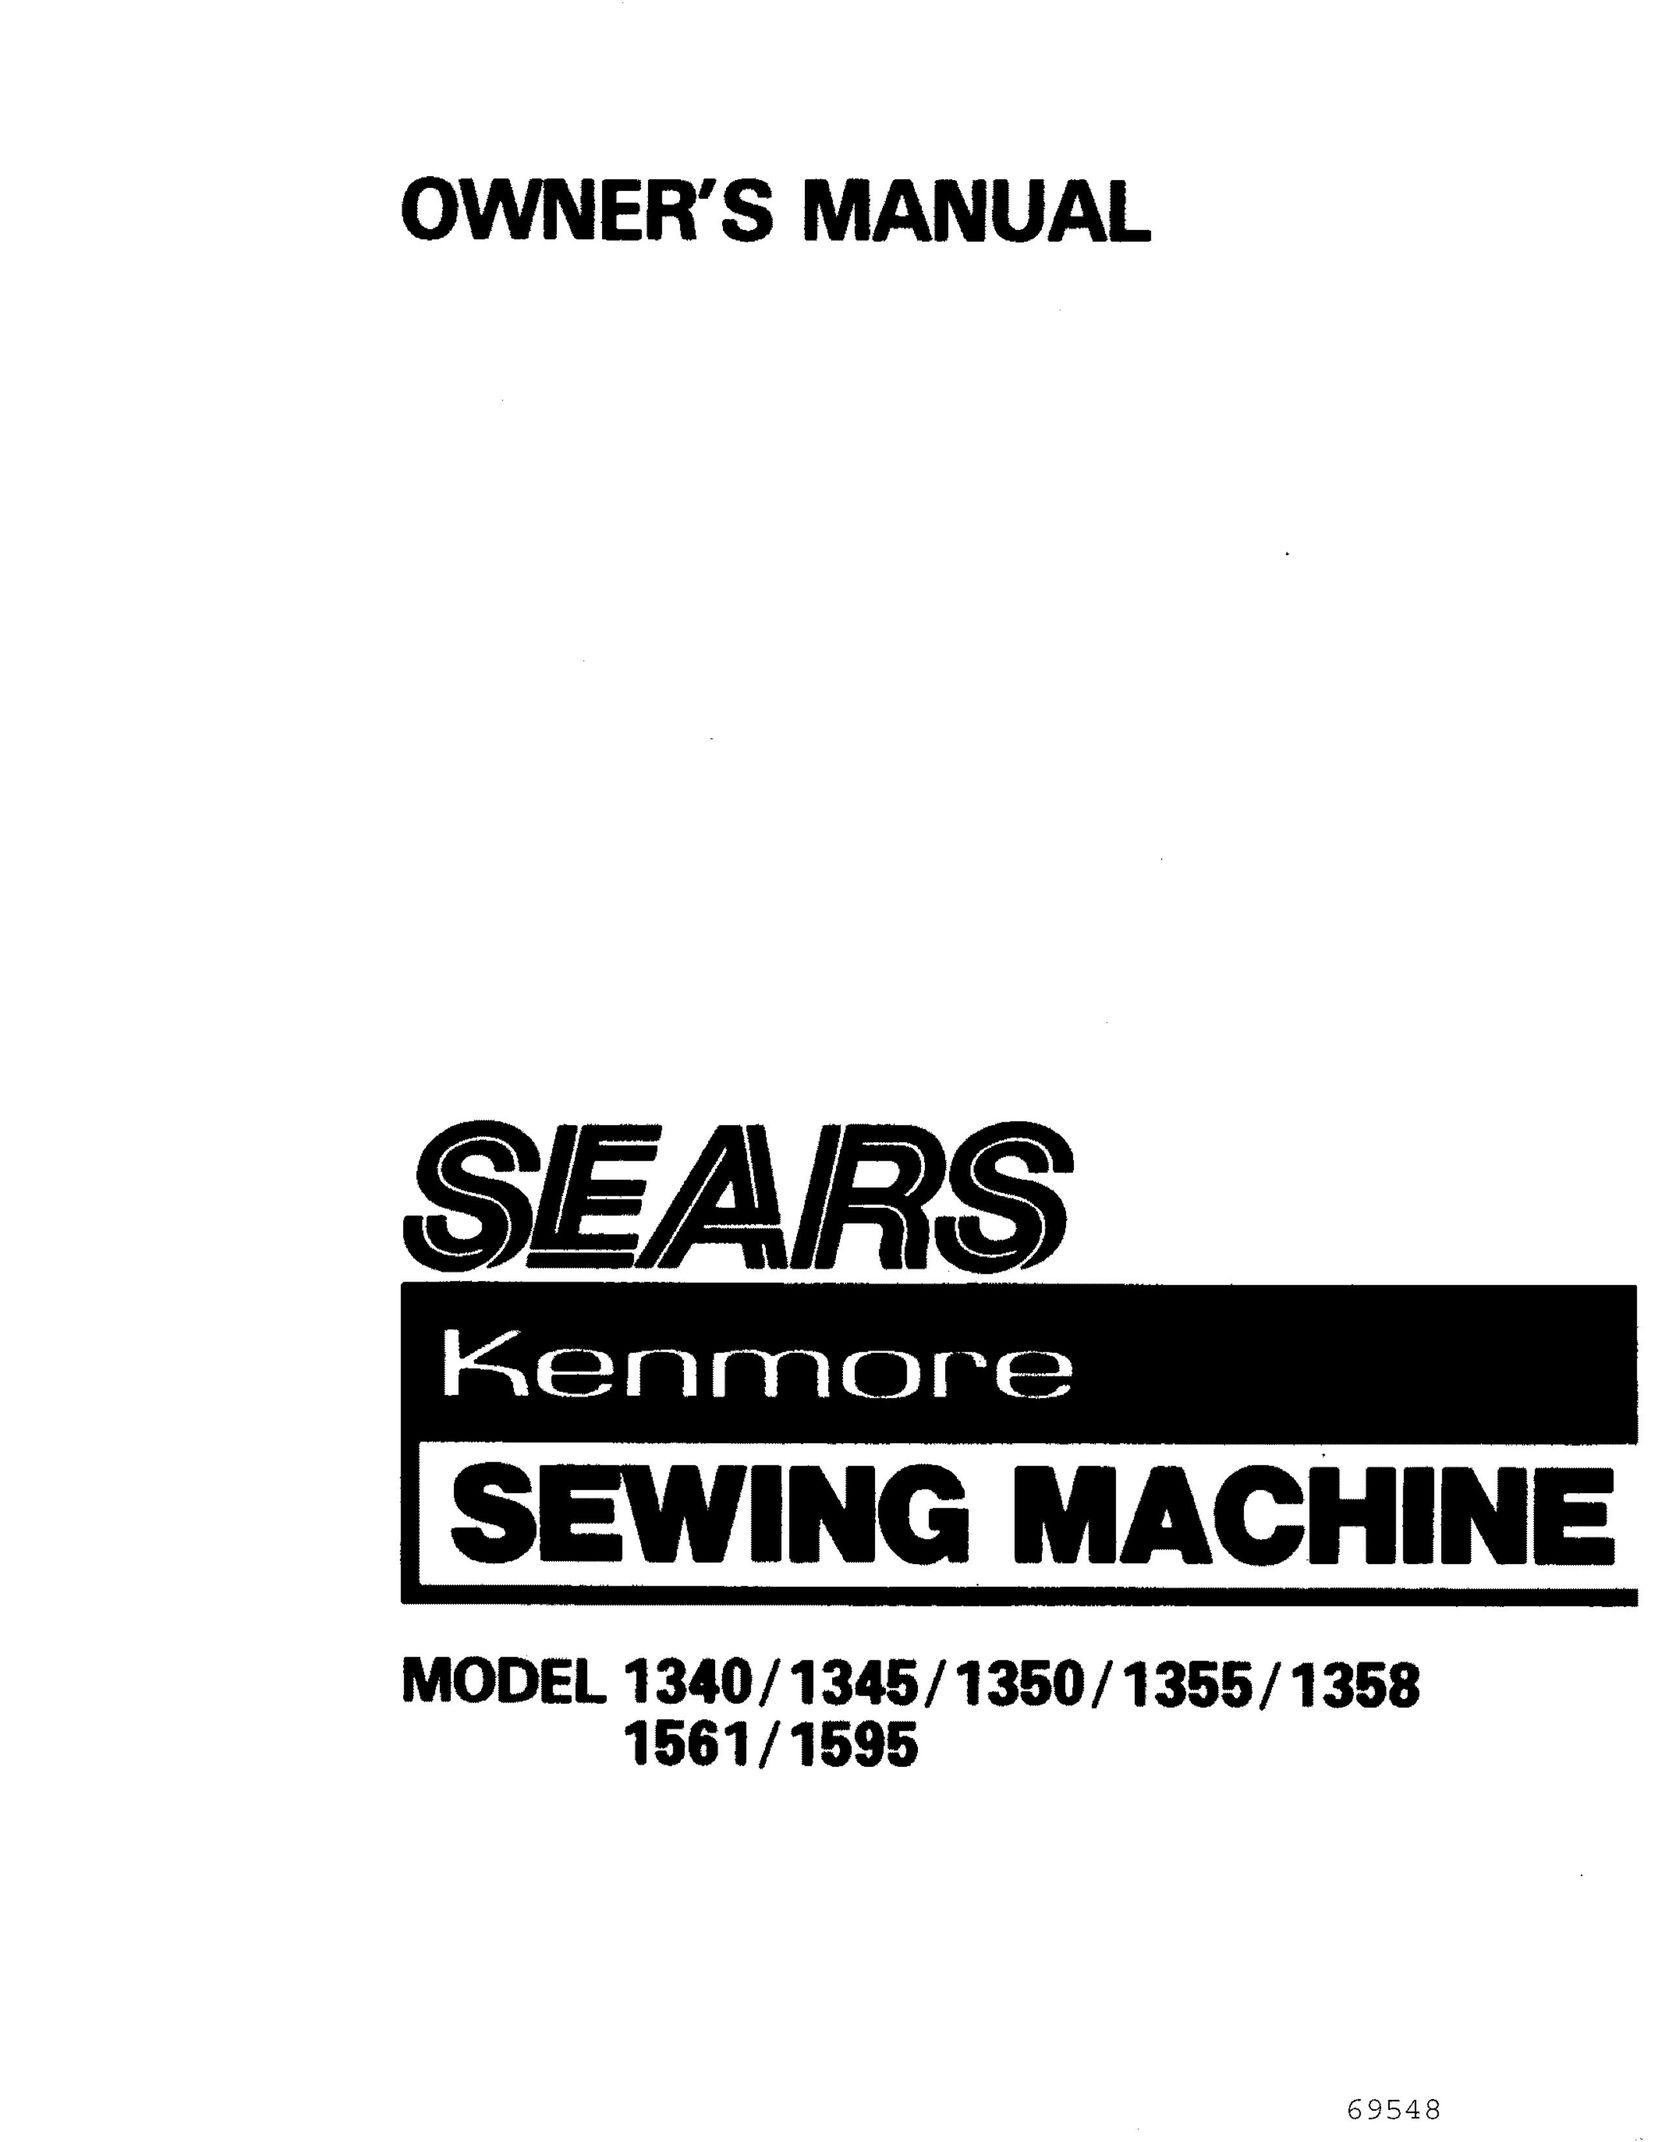 Sears 1595 Sewing Machine User Manual